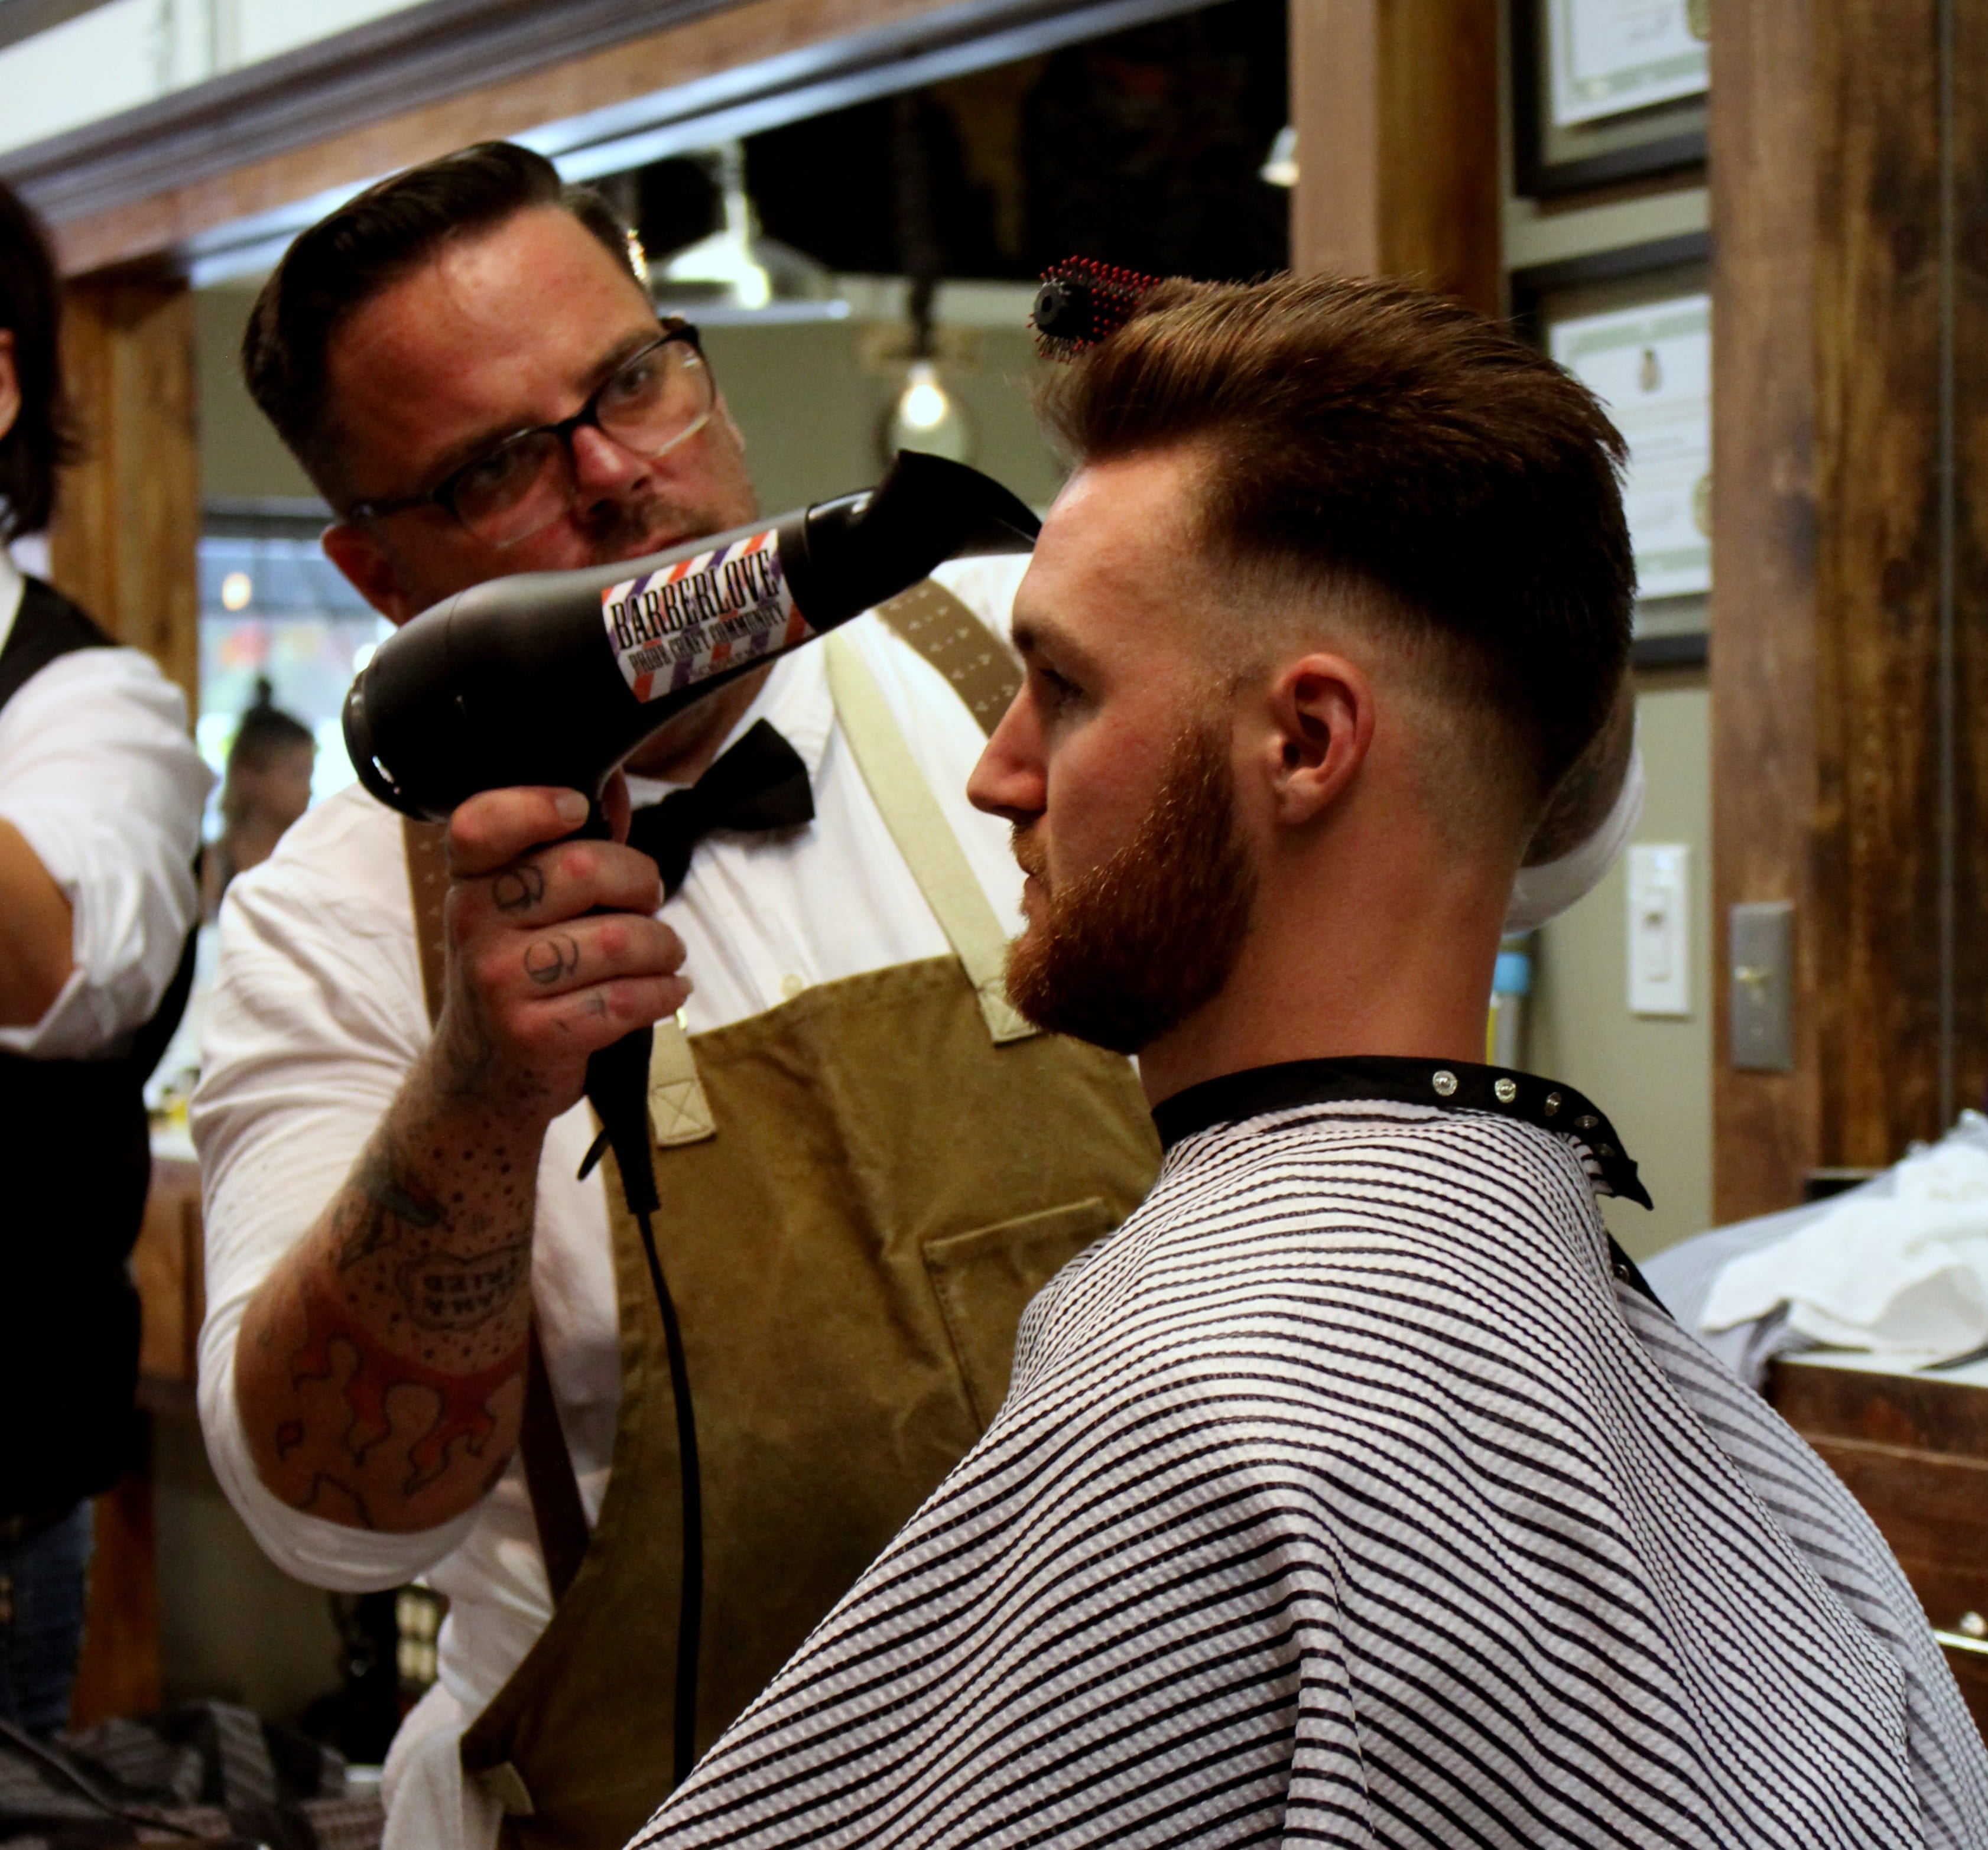 barber blow drying man's hair, hair dryer, salon, hairdresser